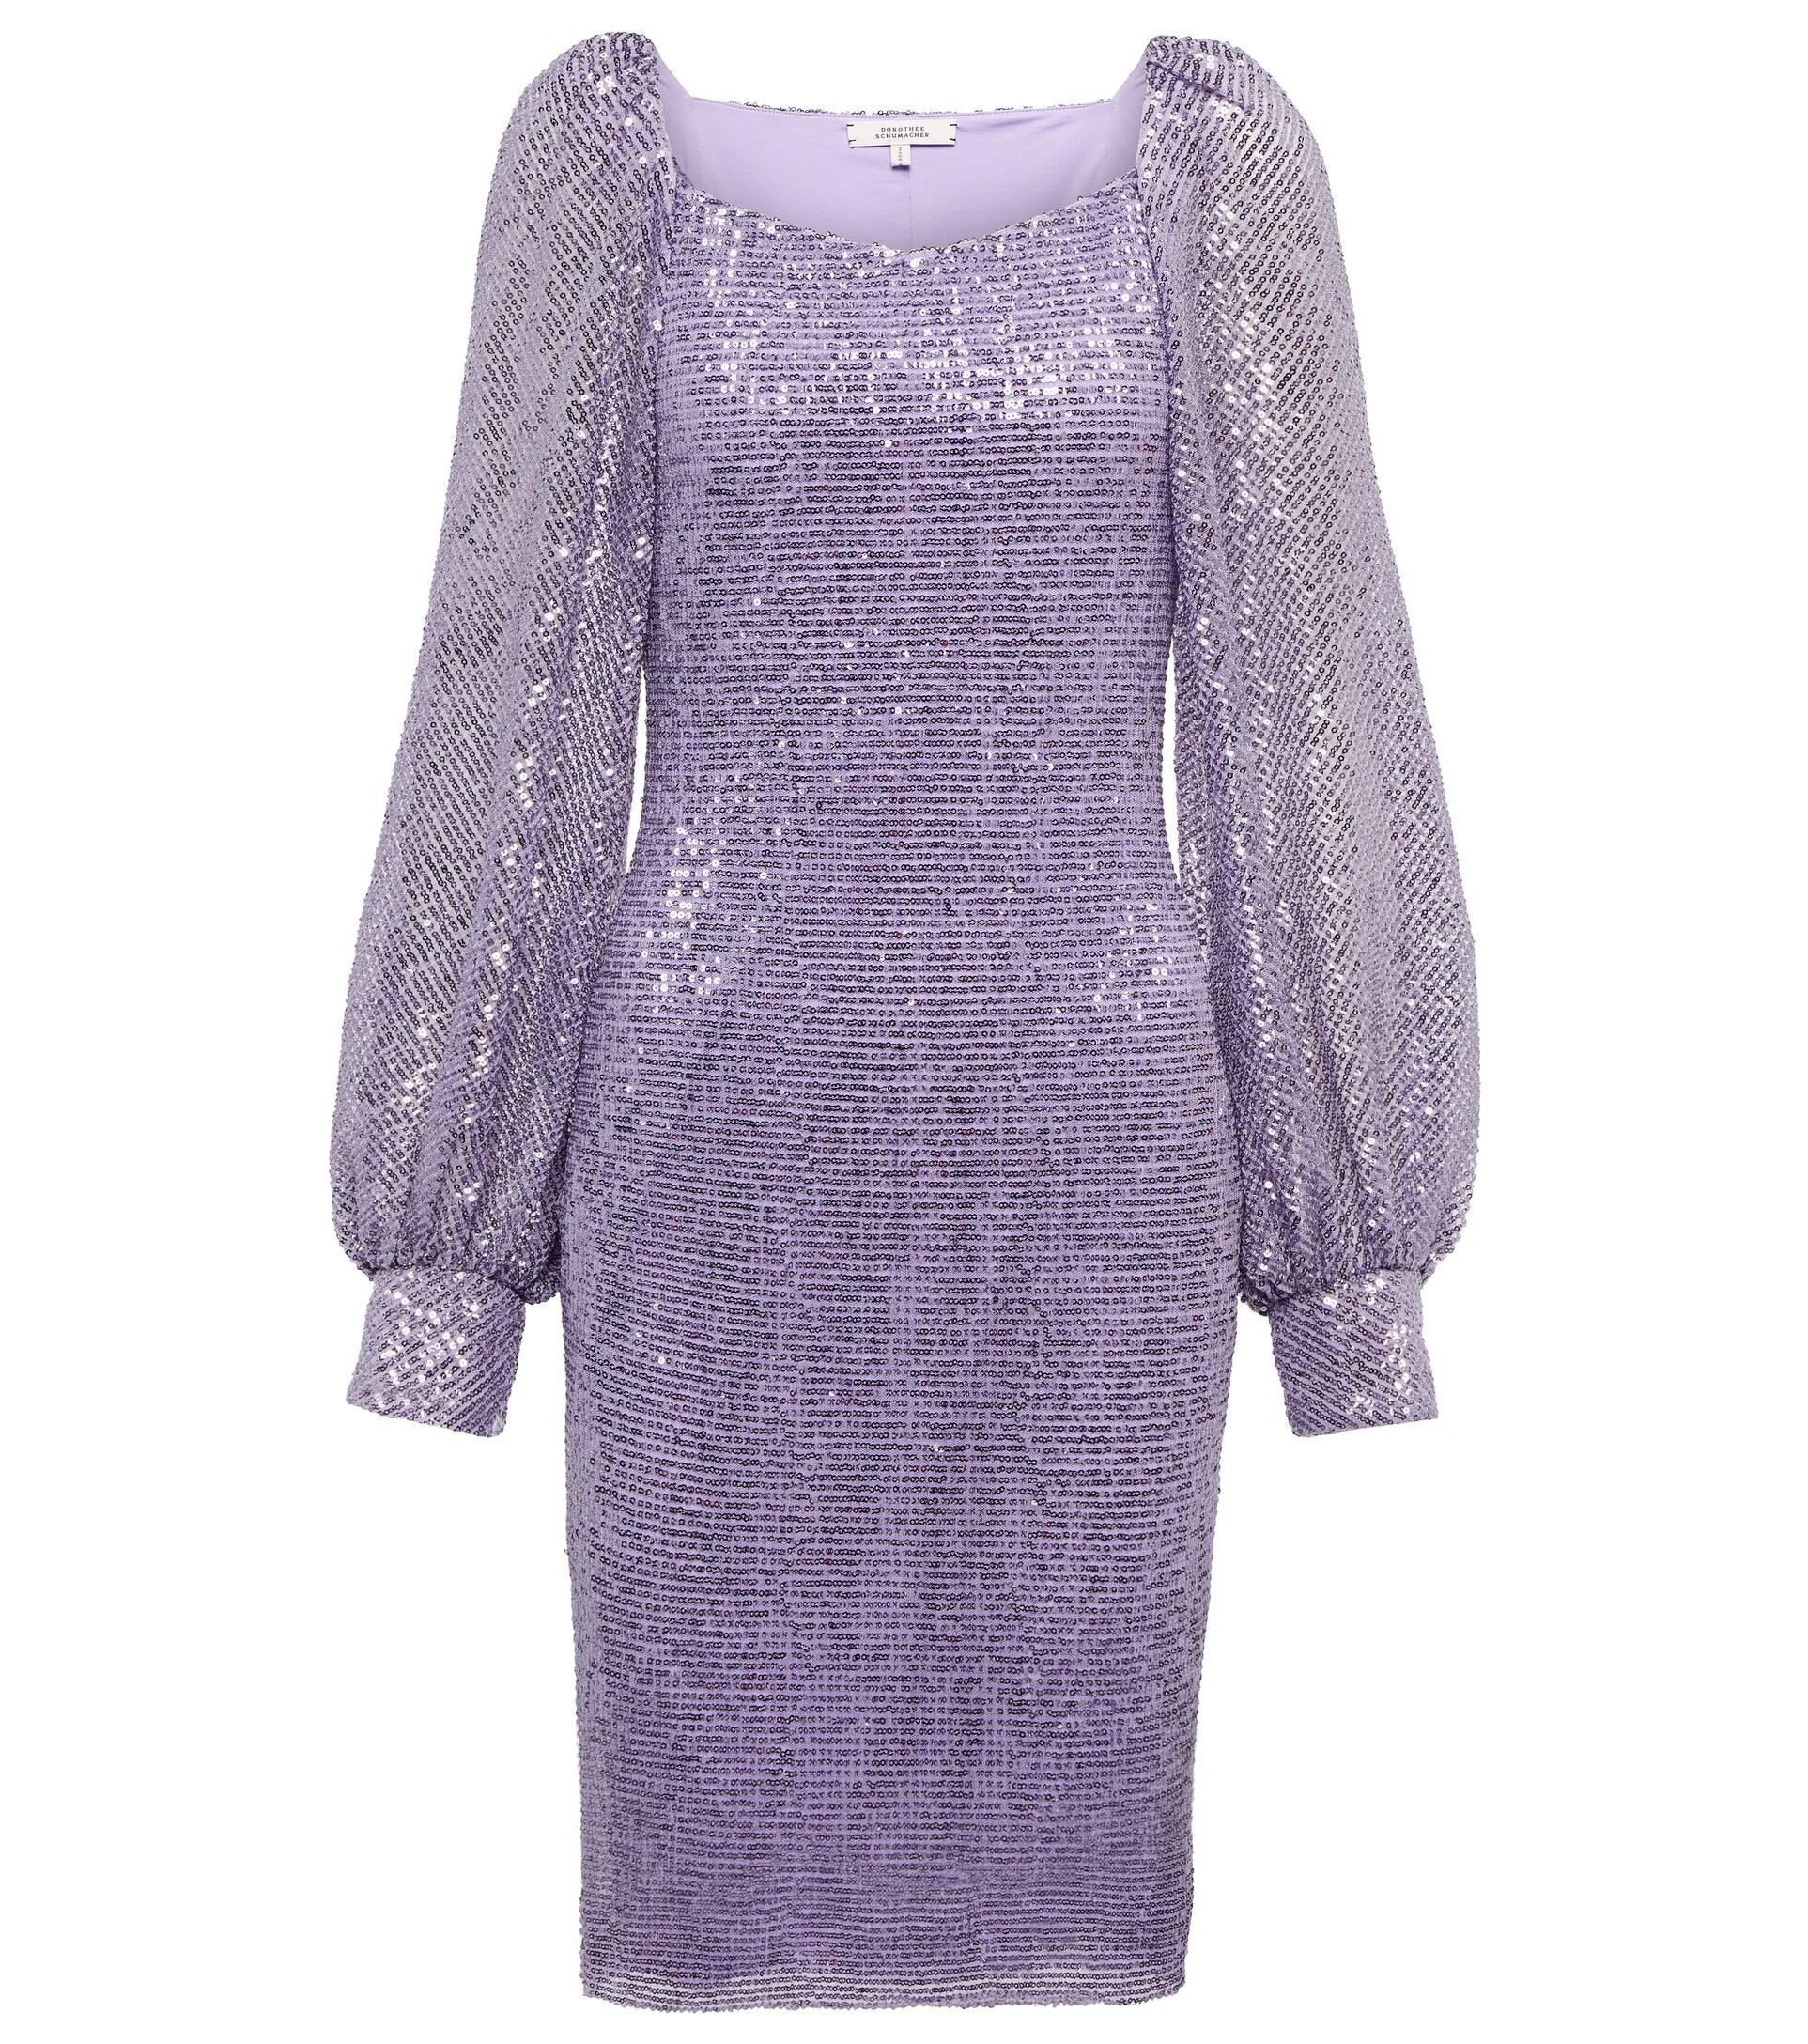 Dorothee Schumacher Sparkling Moment Sequined Minidress in Purple | Lyst